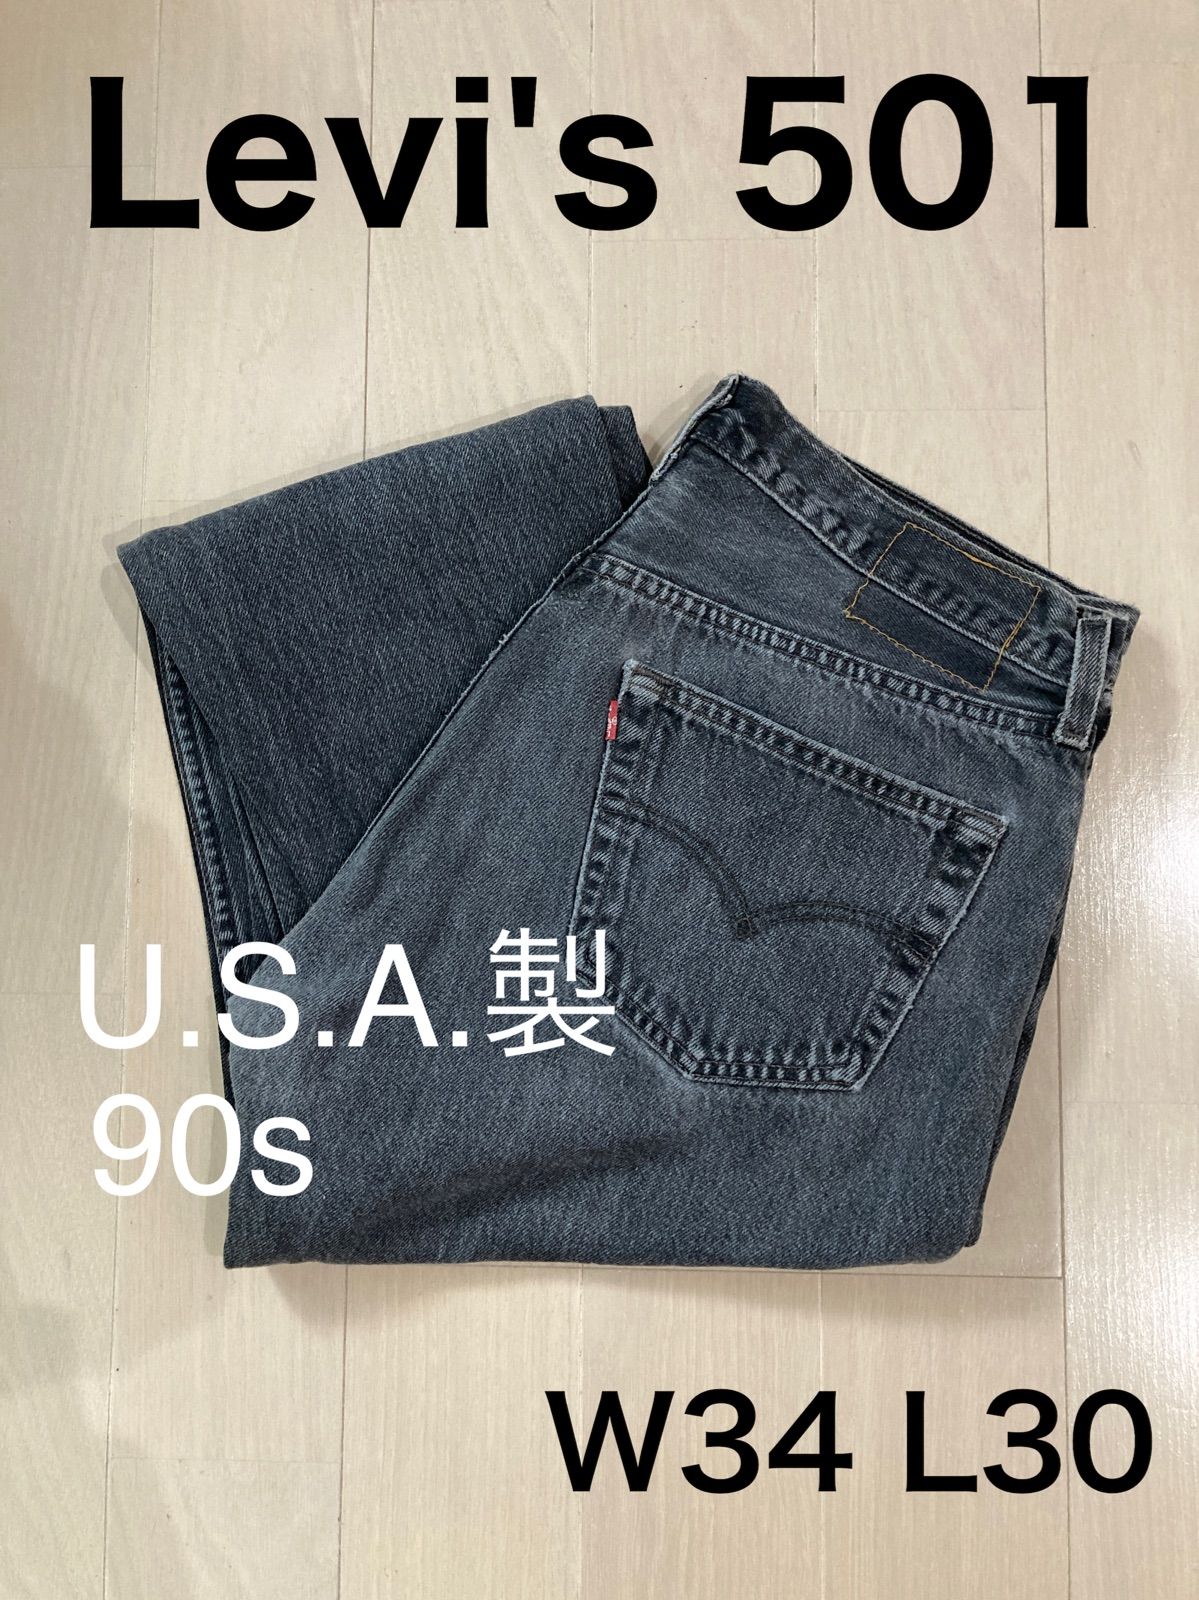 T1【Levi's 501】90s W34 L30 USA製 ブラック 先染め - メルカリ